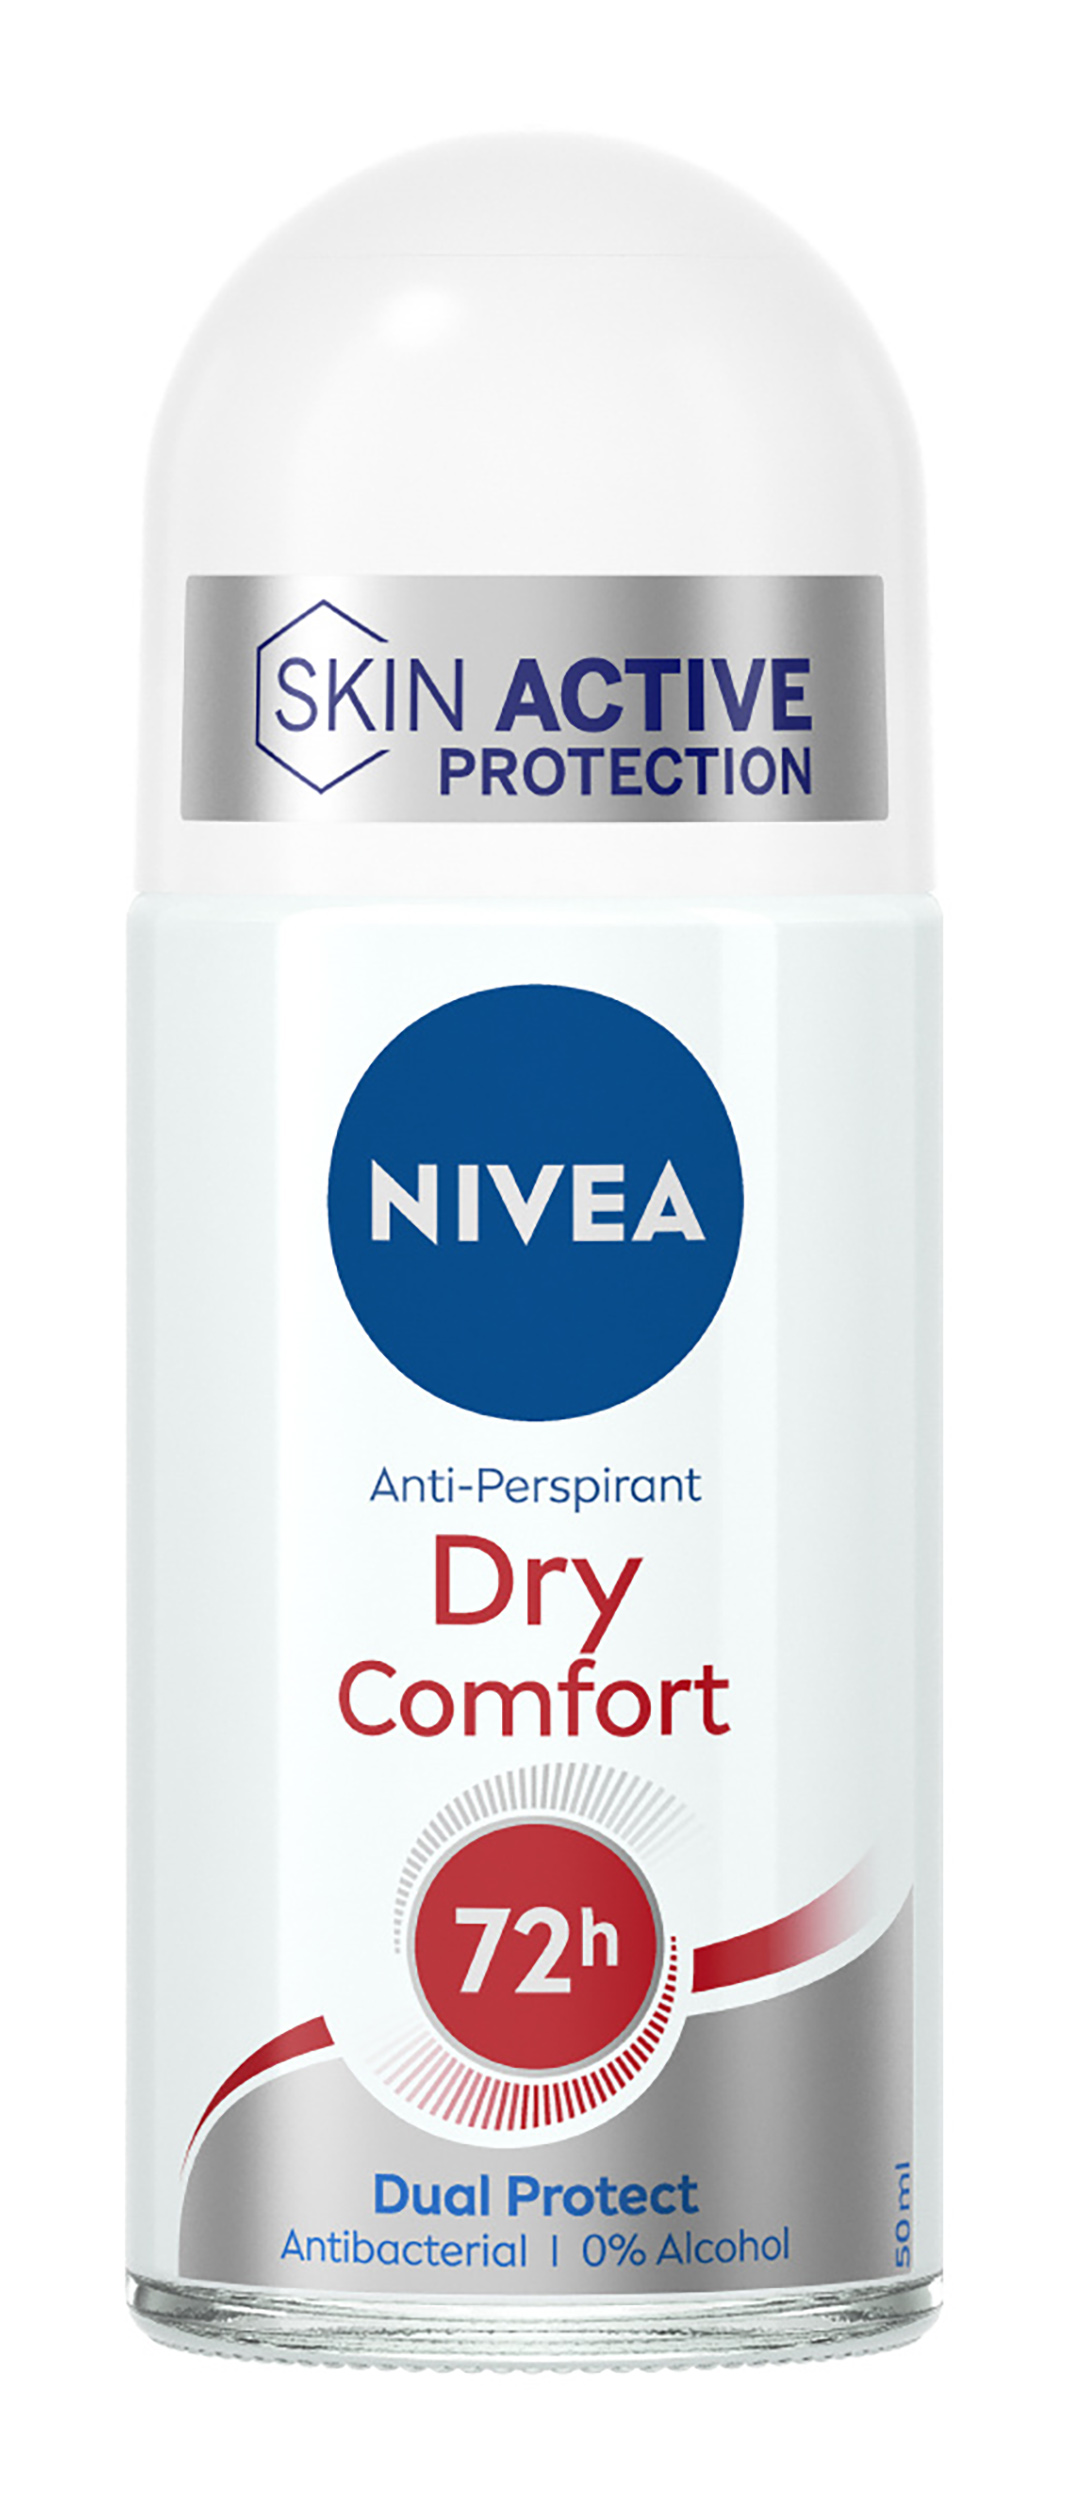 Nivea Desodorante Roll On Dry Comfort Plus